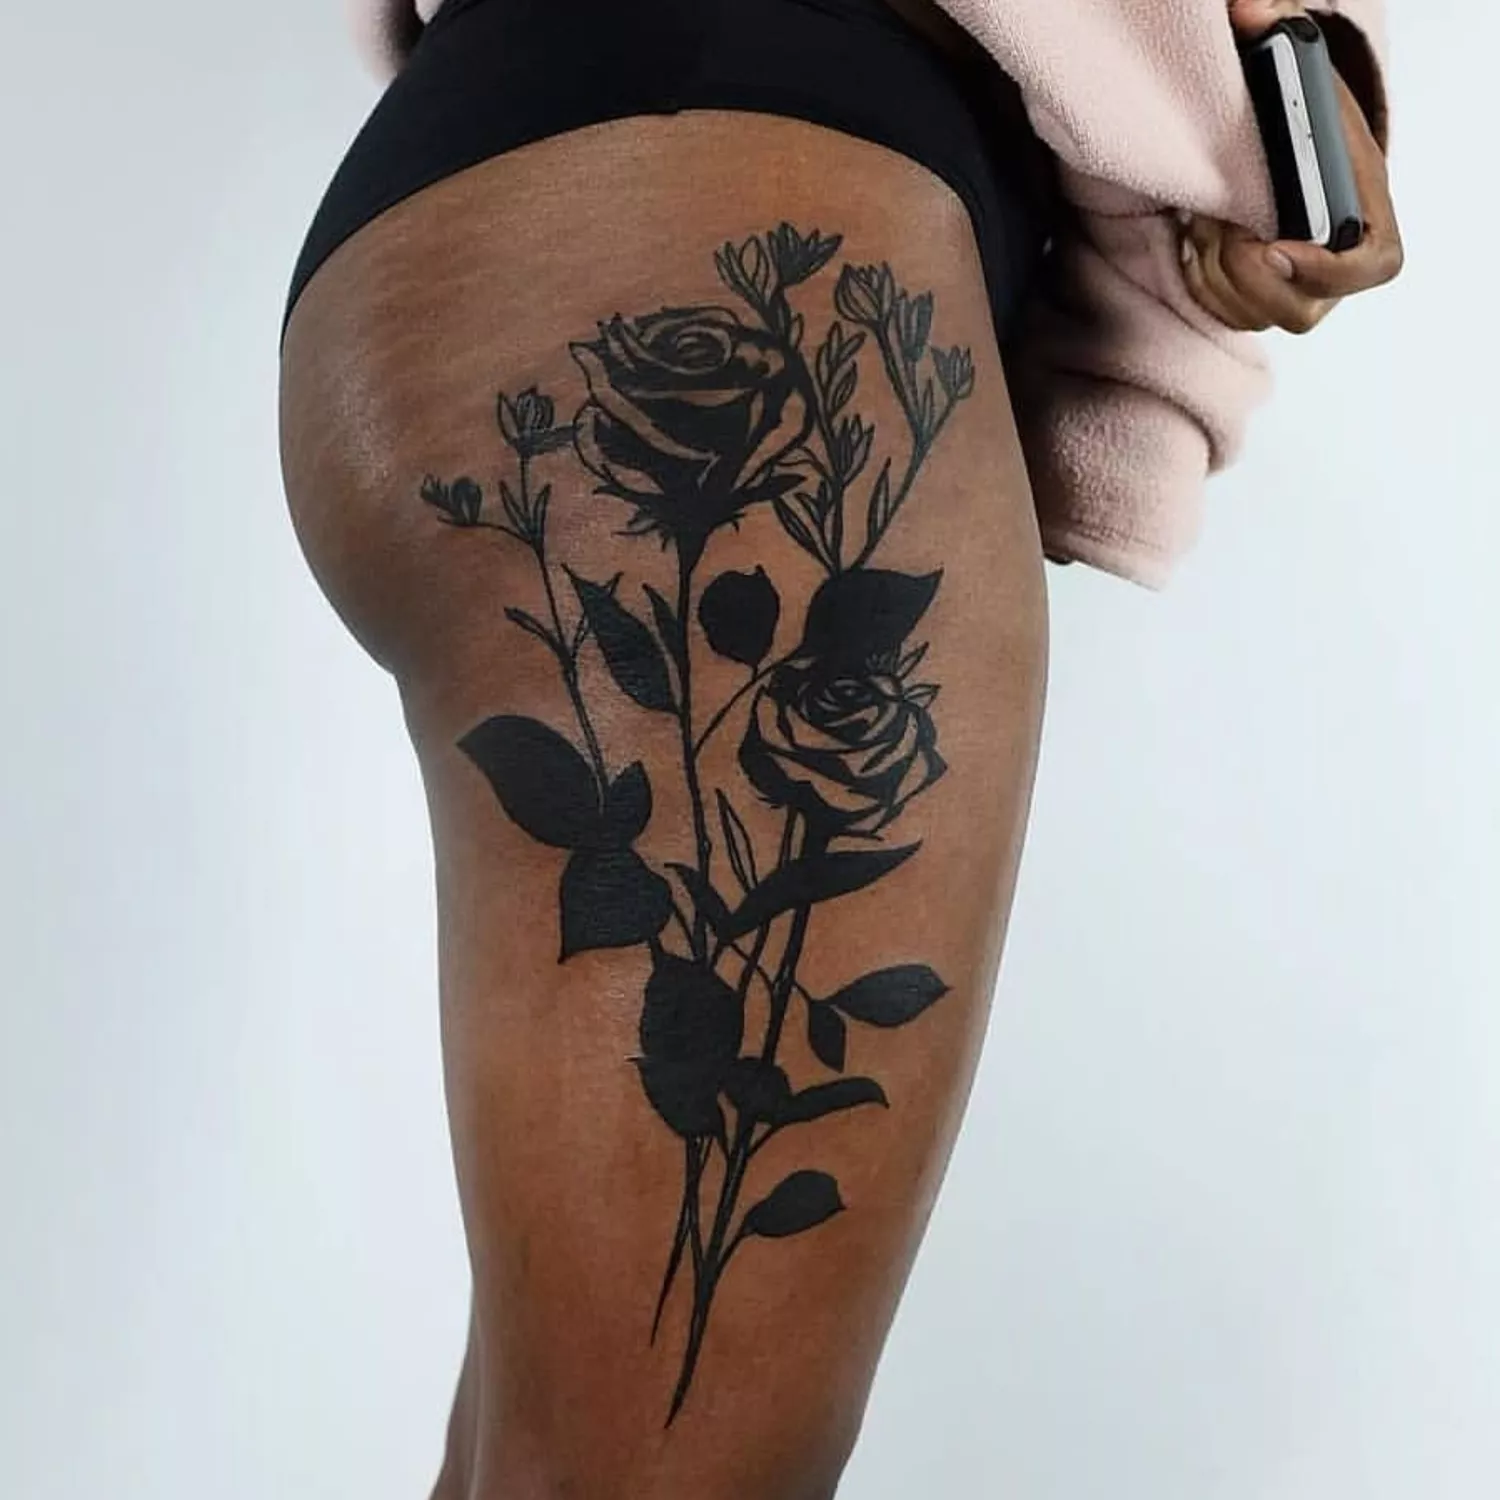 A close up of a rose stem thigh tattoo.